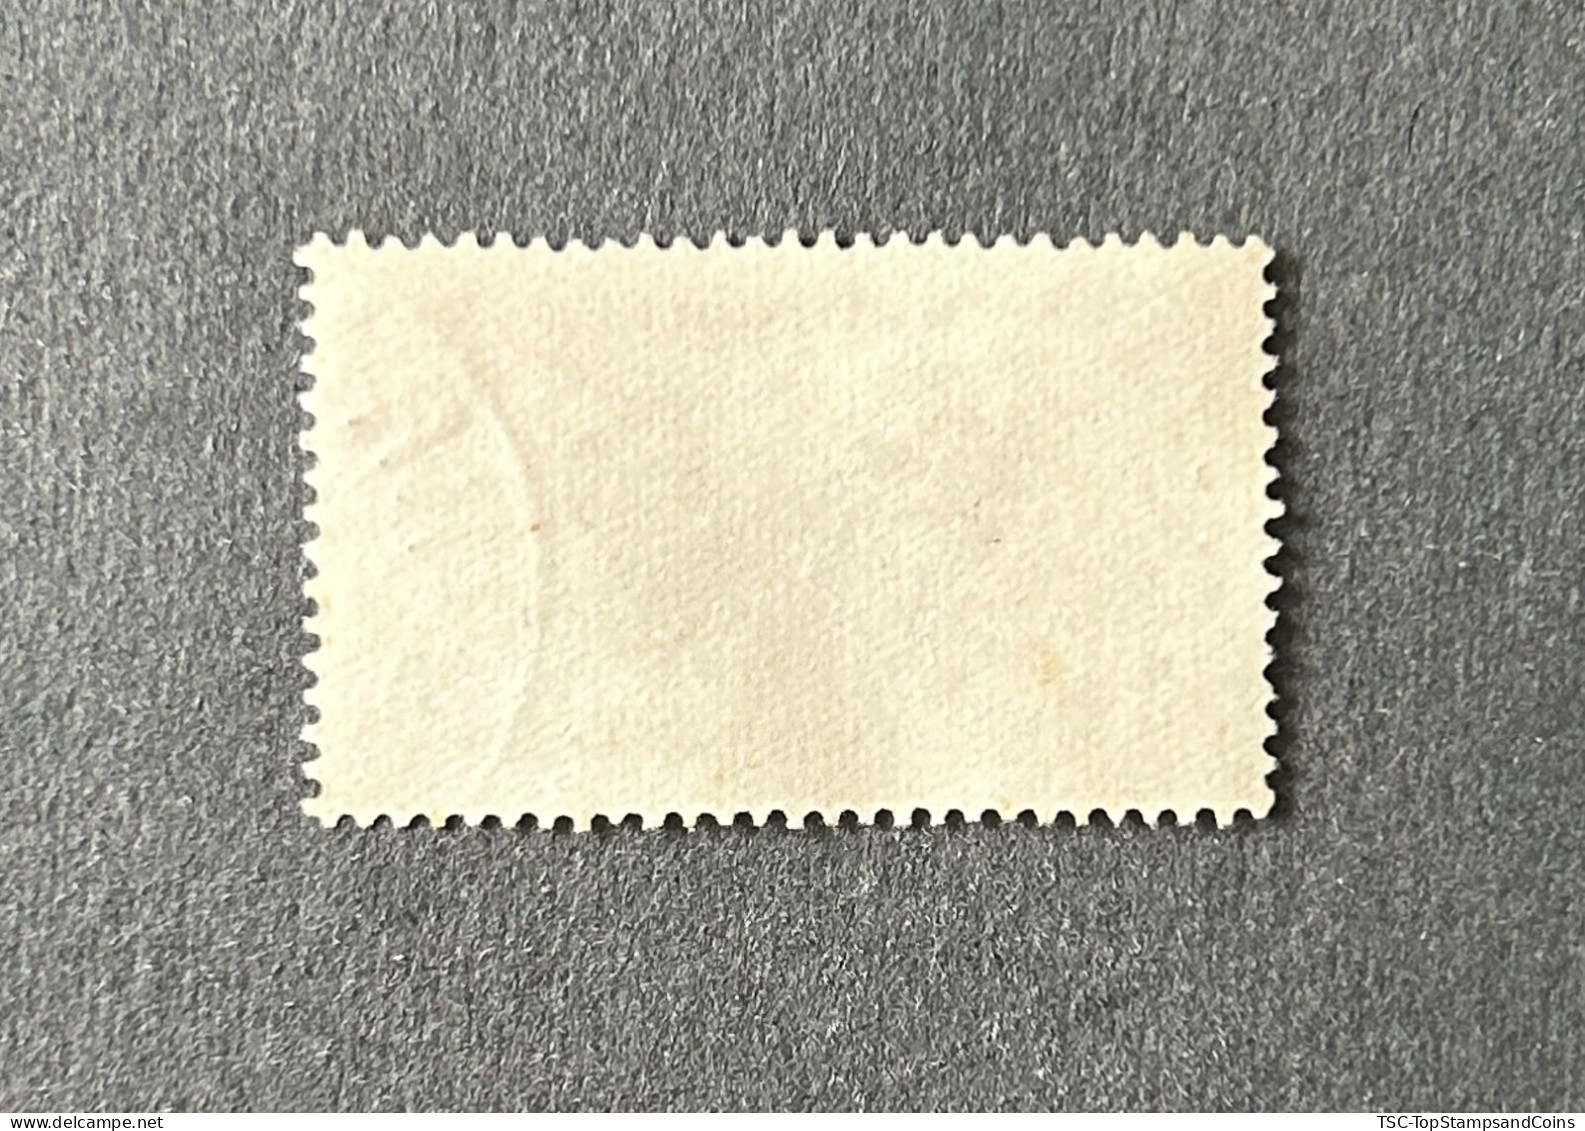 FRMAR0139U - Local Motives - Martiniquaises -  20 C Used Stamp - Martinique 1933 -  YT FR-MAR 139 - Gebraucht